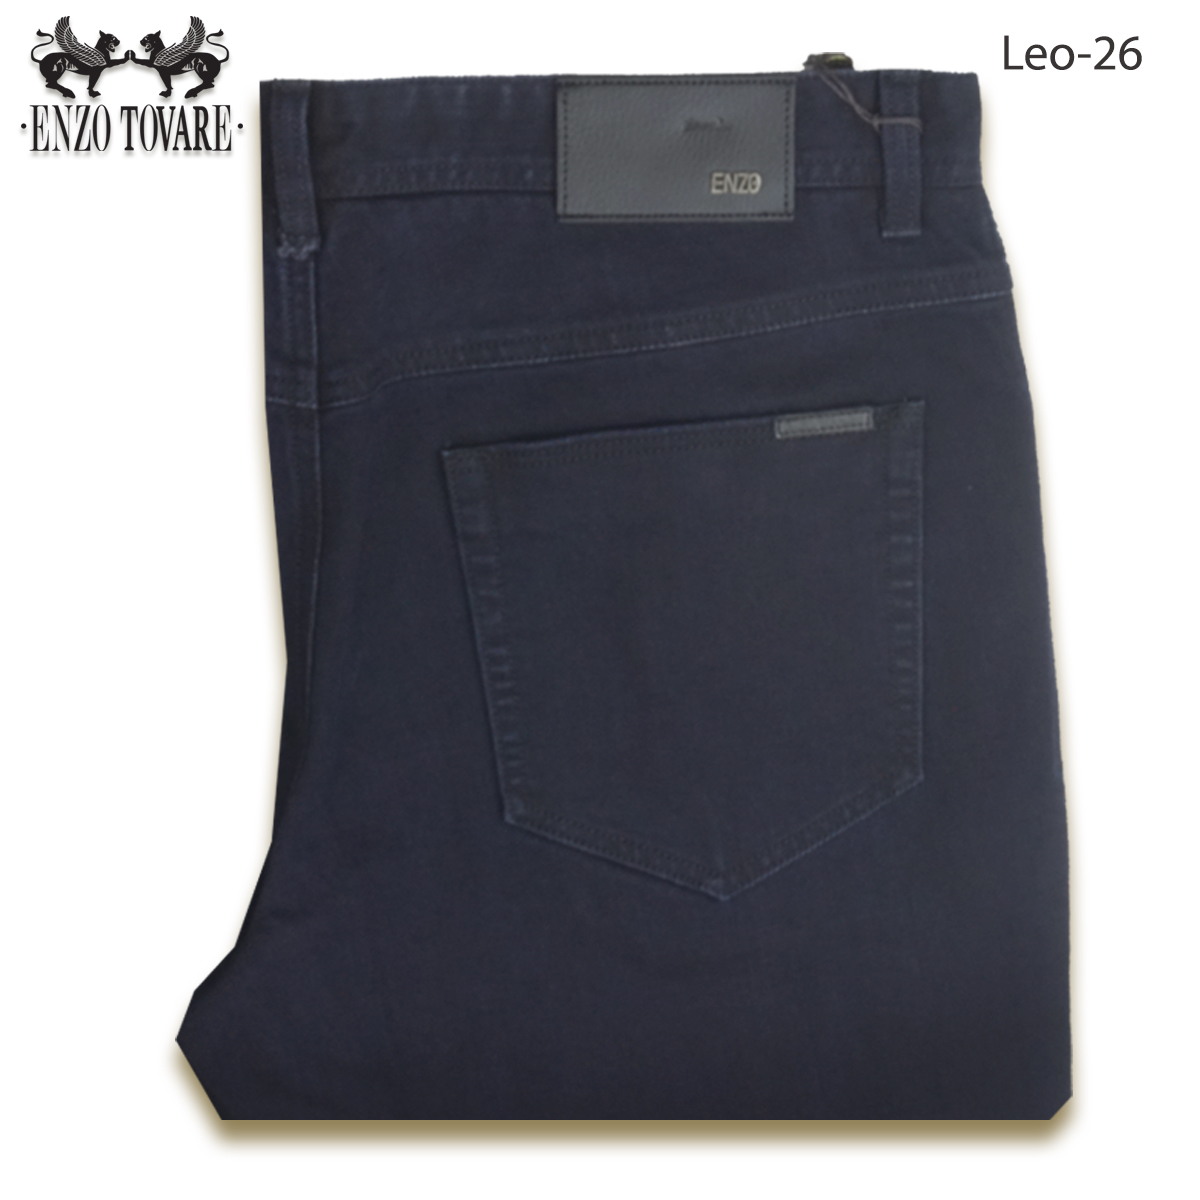 Enzo Leo Jeans in Black or Gray Fabrics